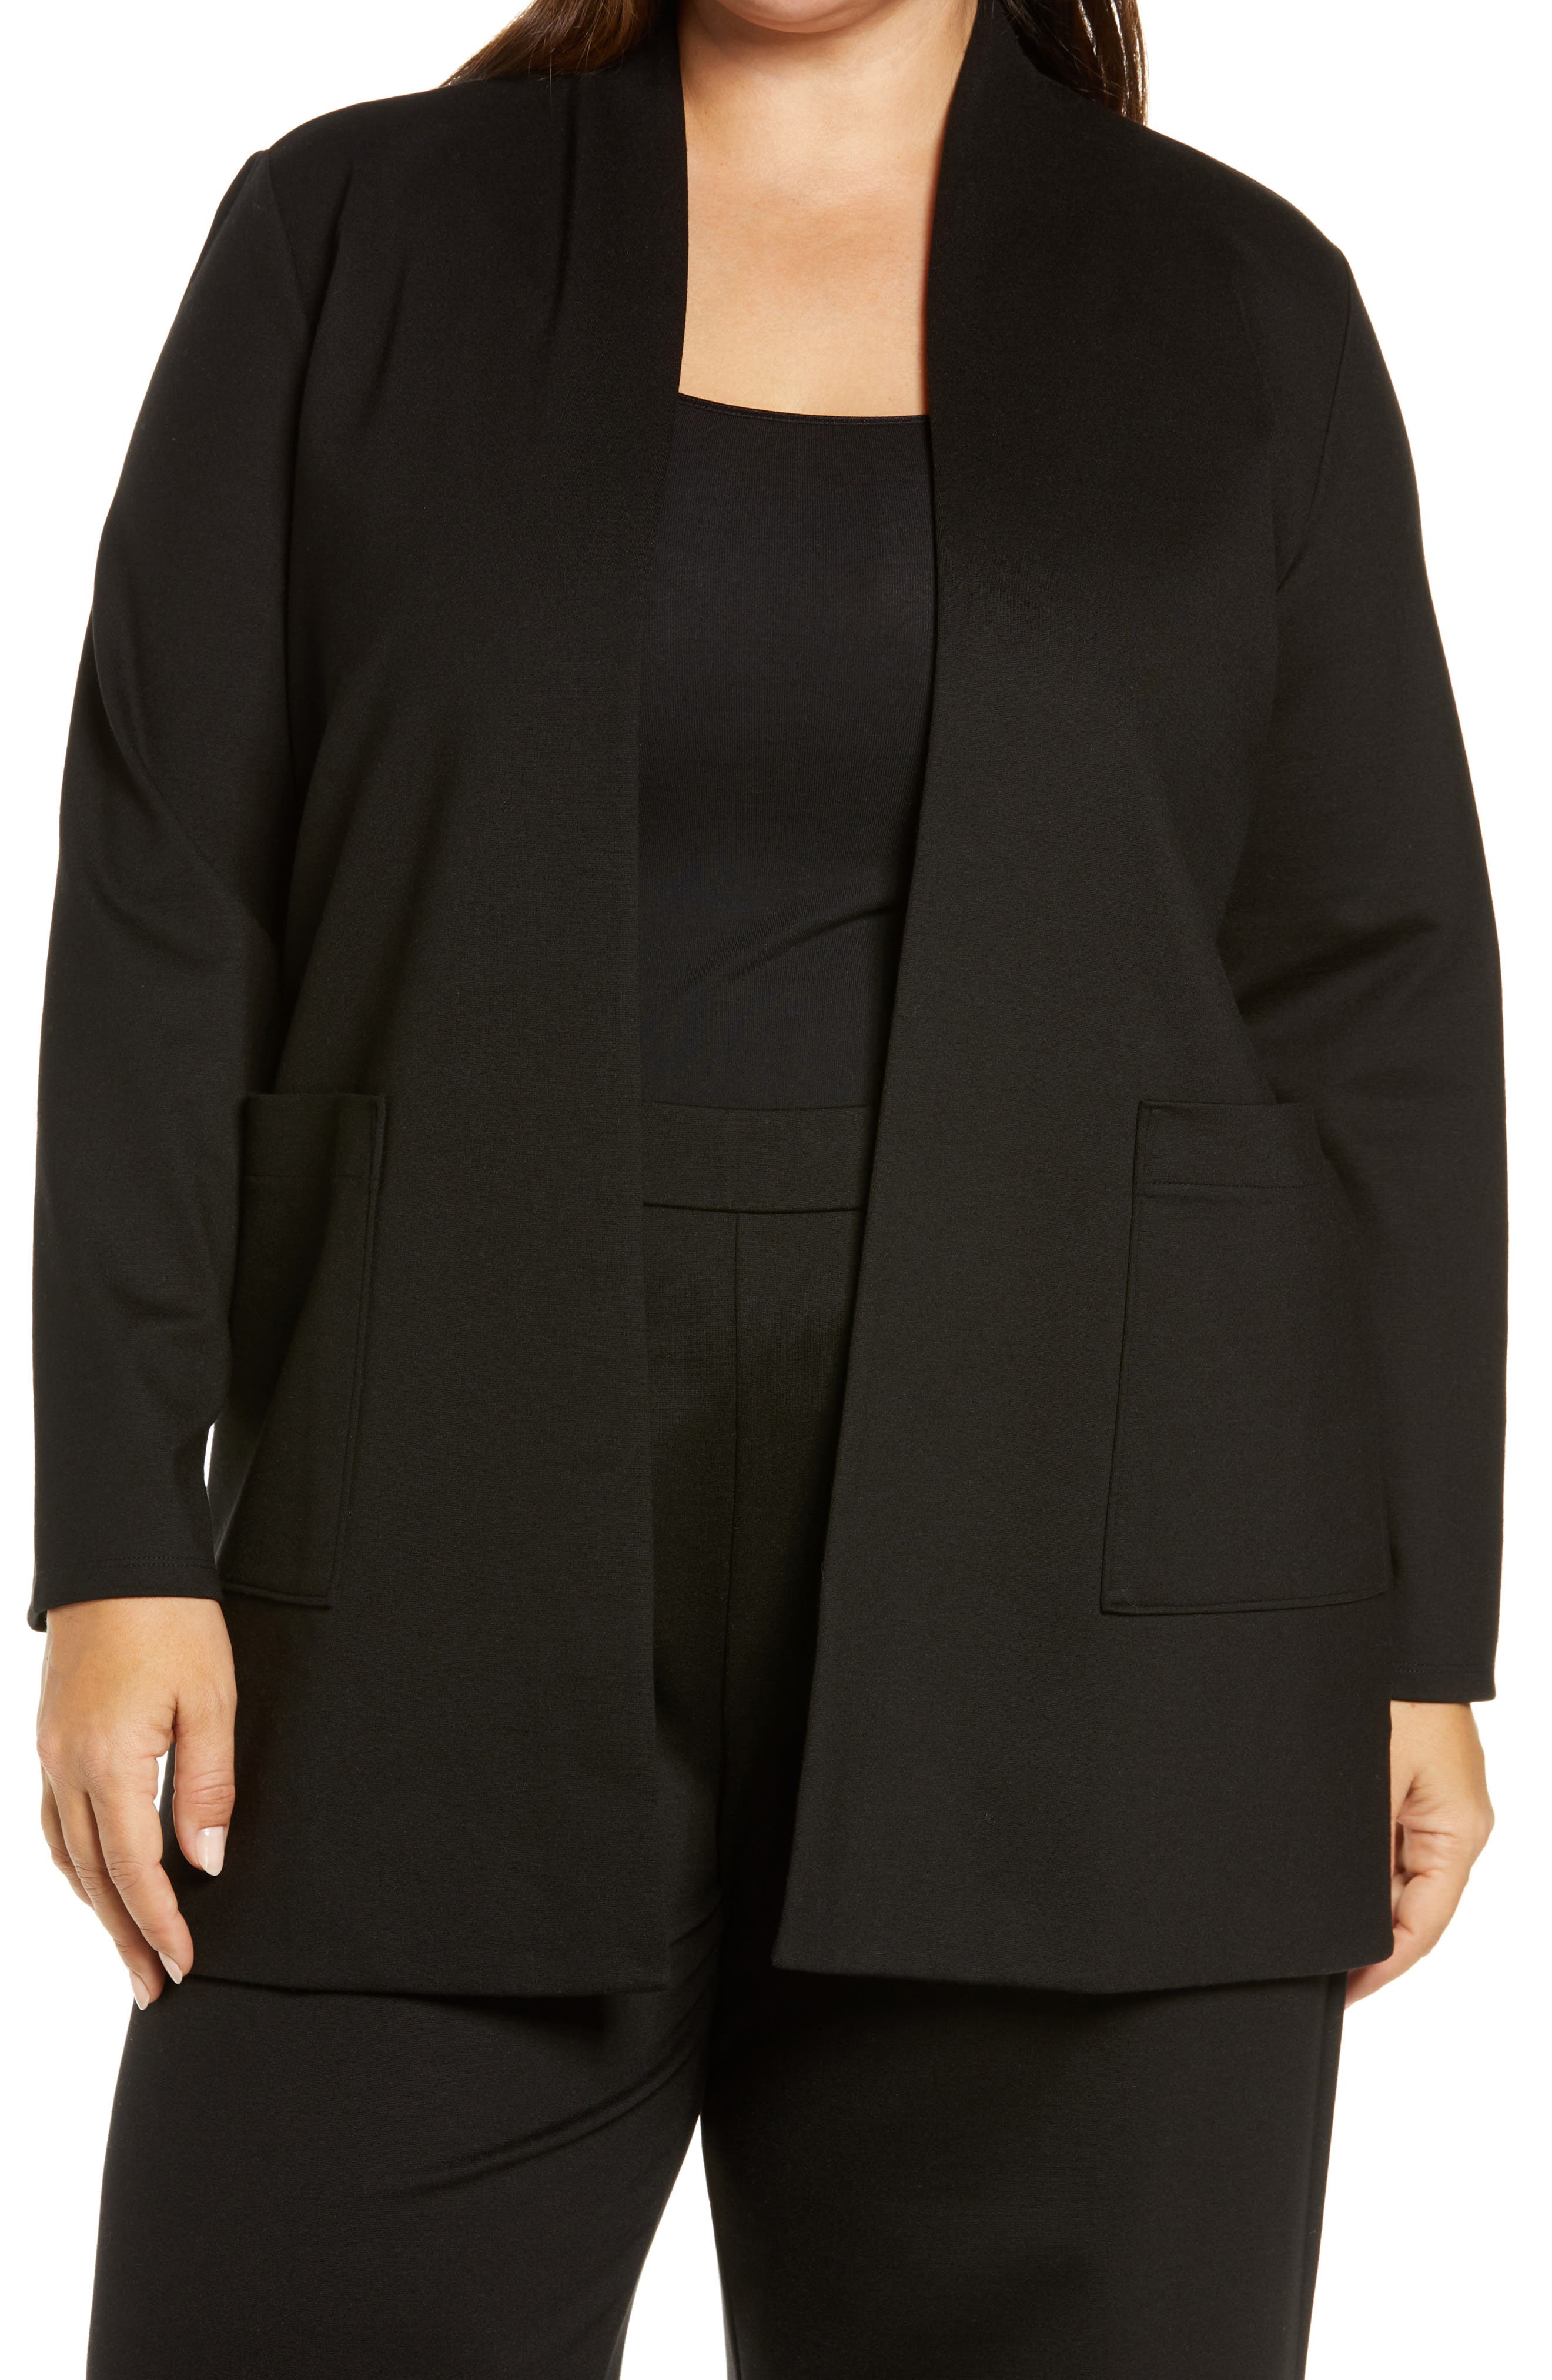 MOUTEN Womens Plus Size Relaxed Fit Open Front Fashion Big Pockets Dress Blazer Jacket Coat 